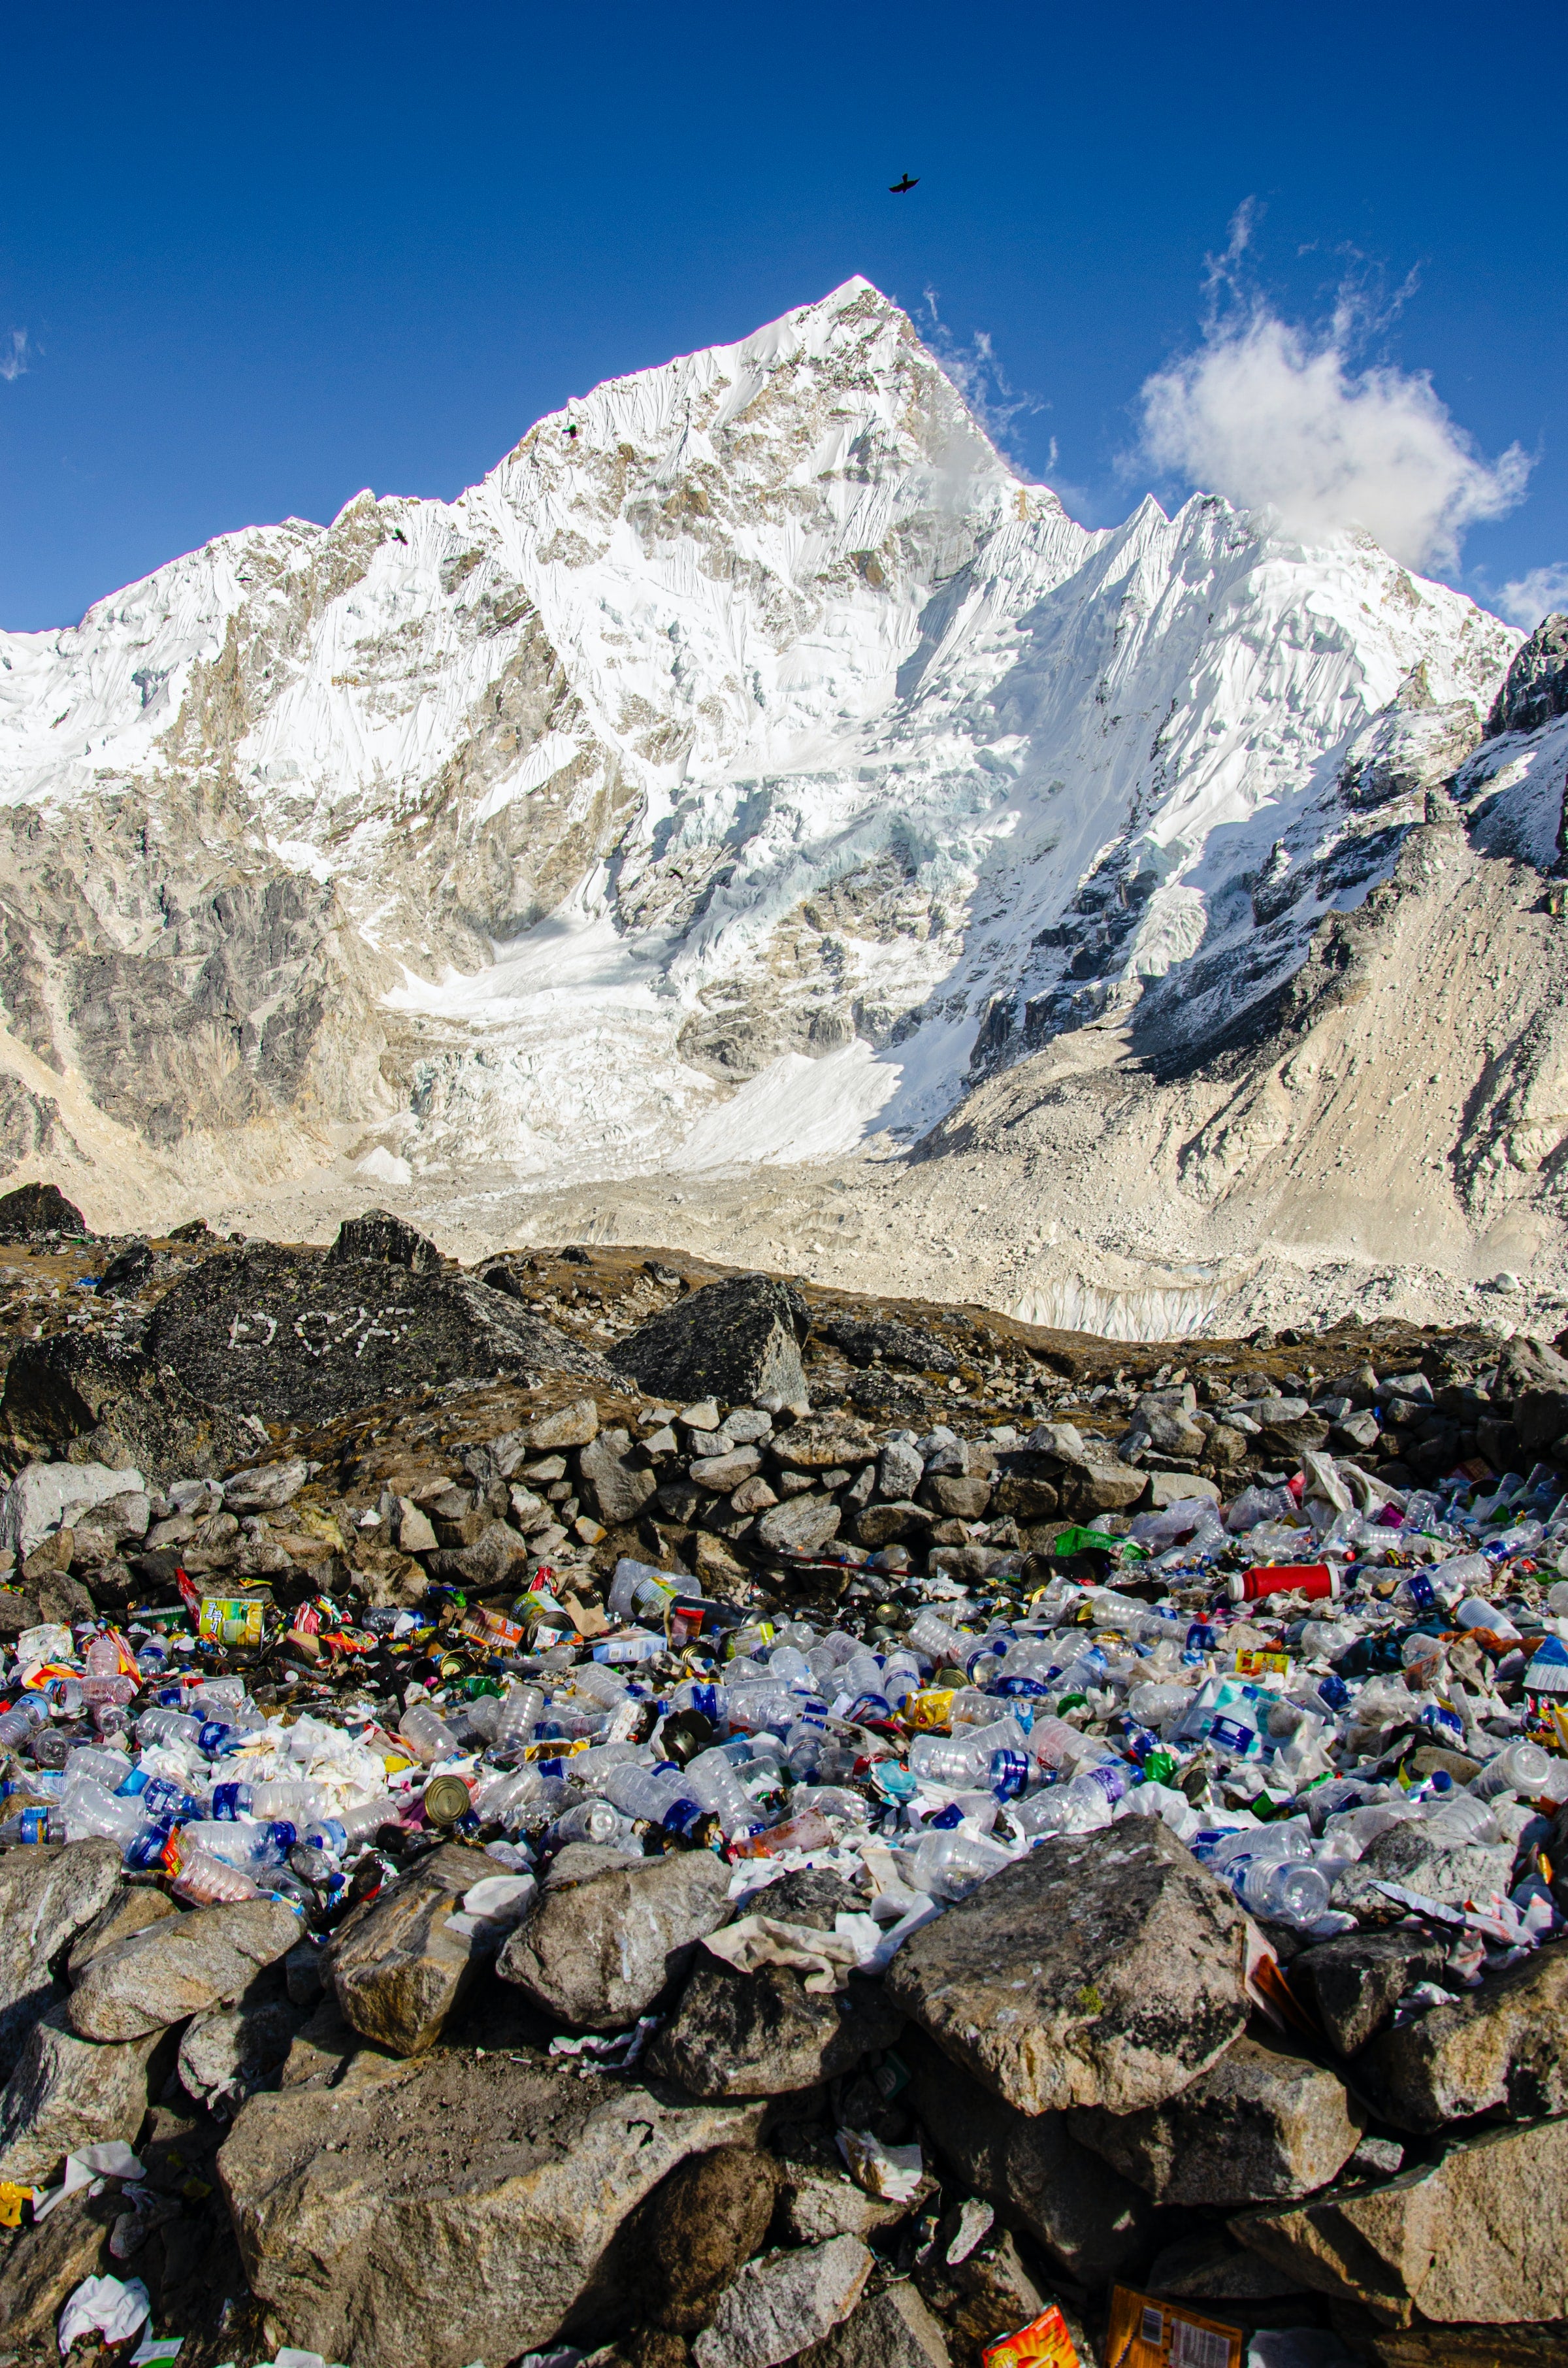 Garbage in Himalayas, by Sylwia Bartyzel, via Unsplash